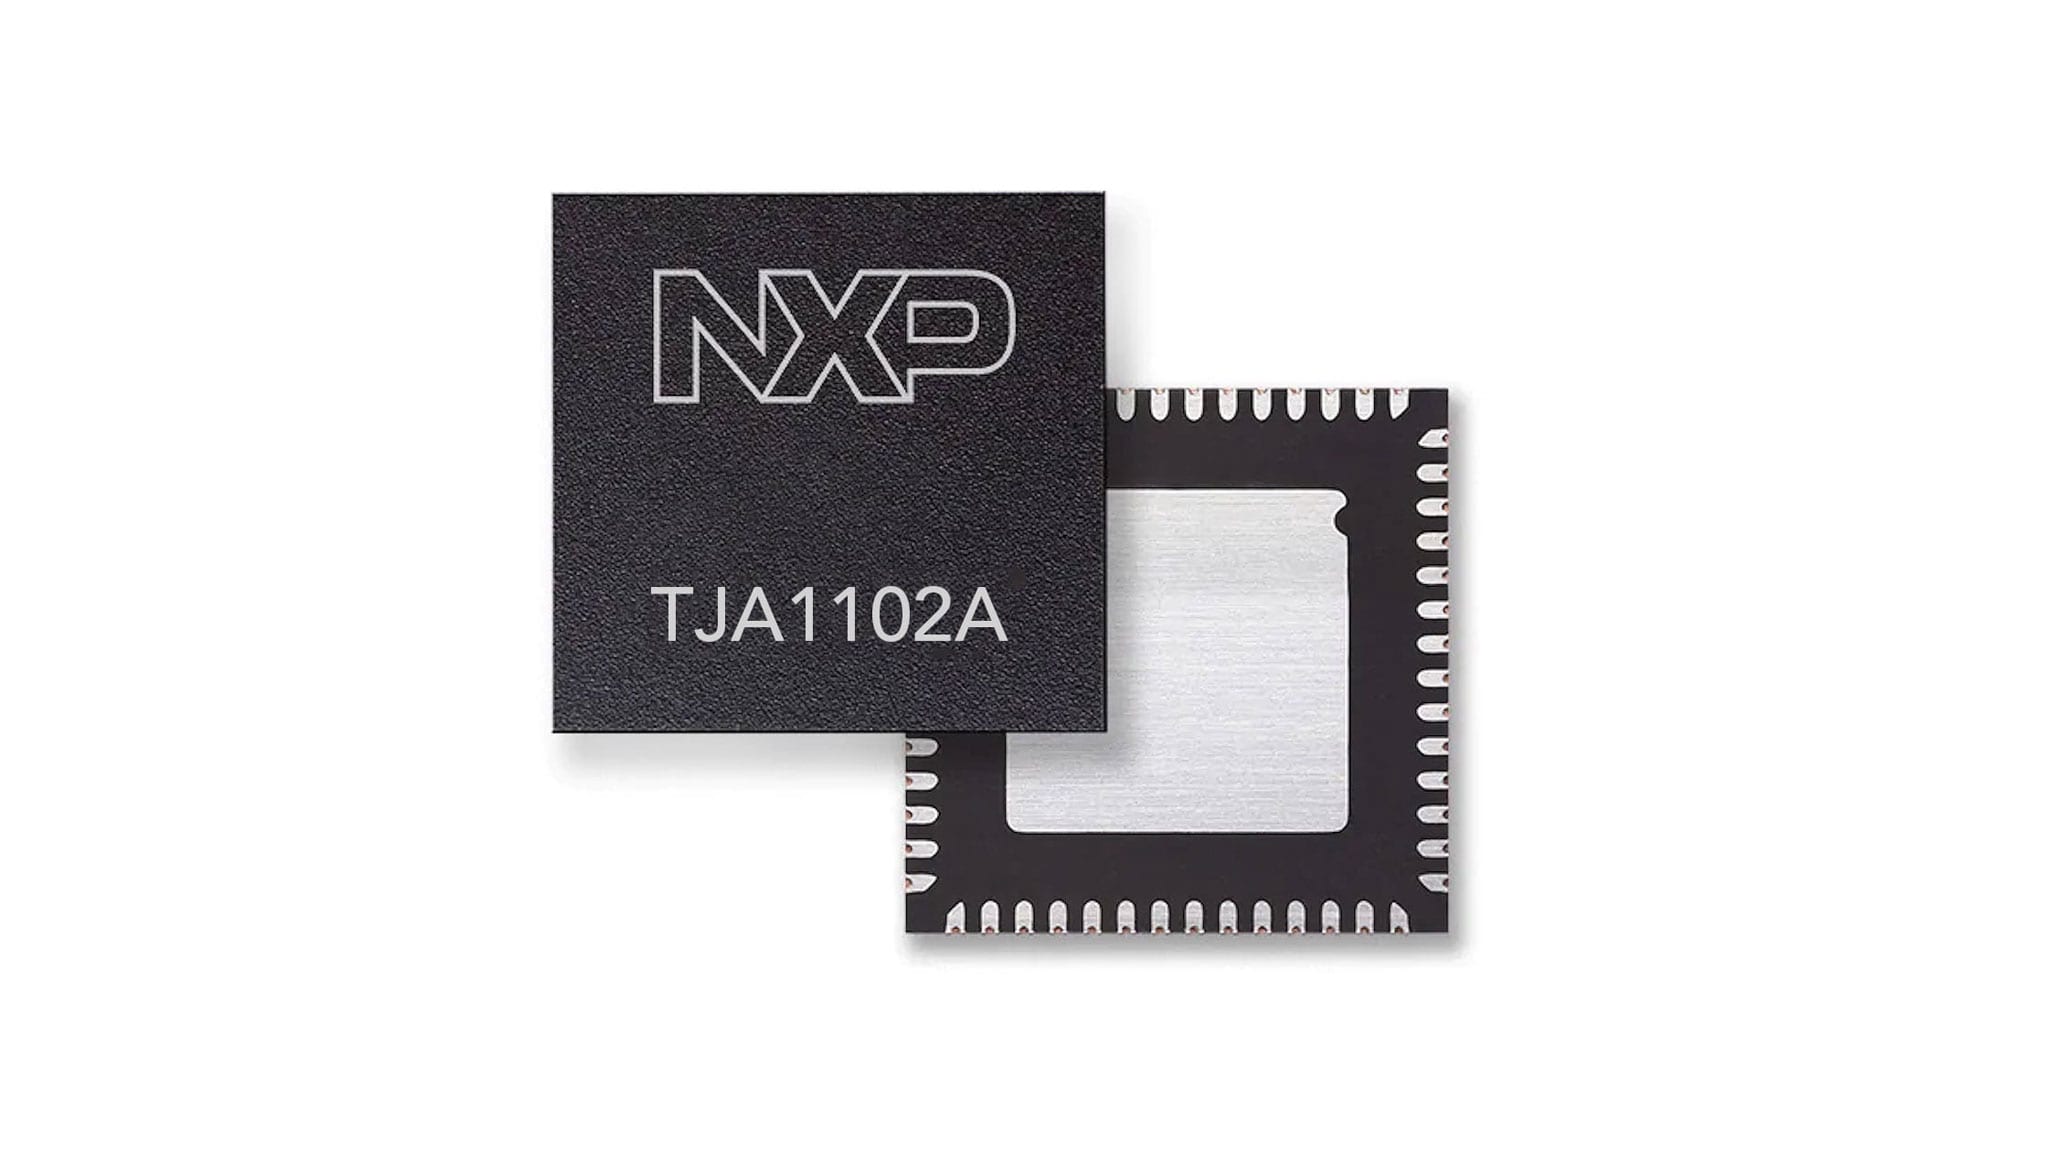 TJA1102A Chip Shot